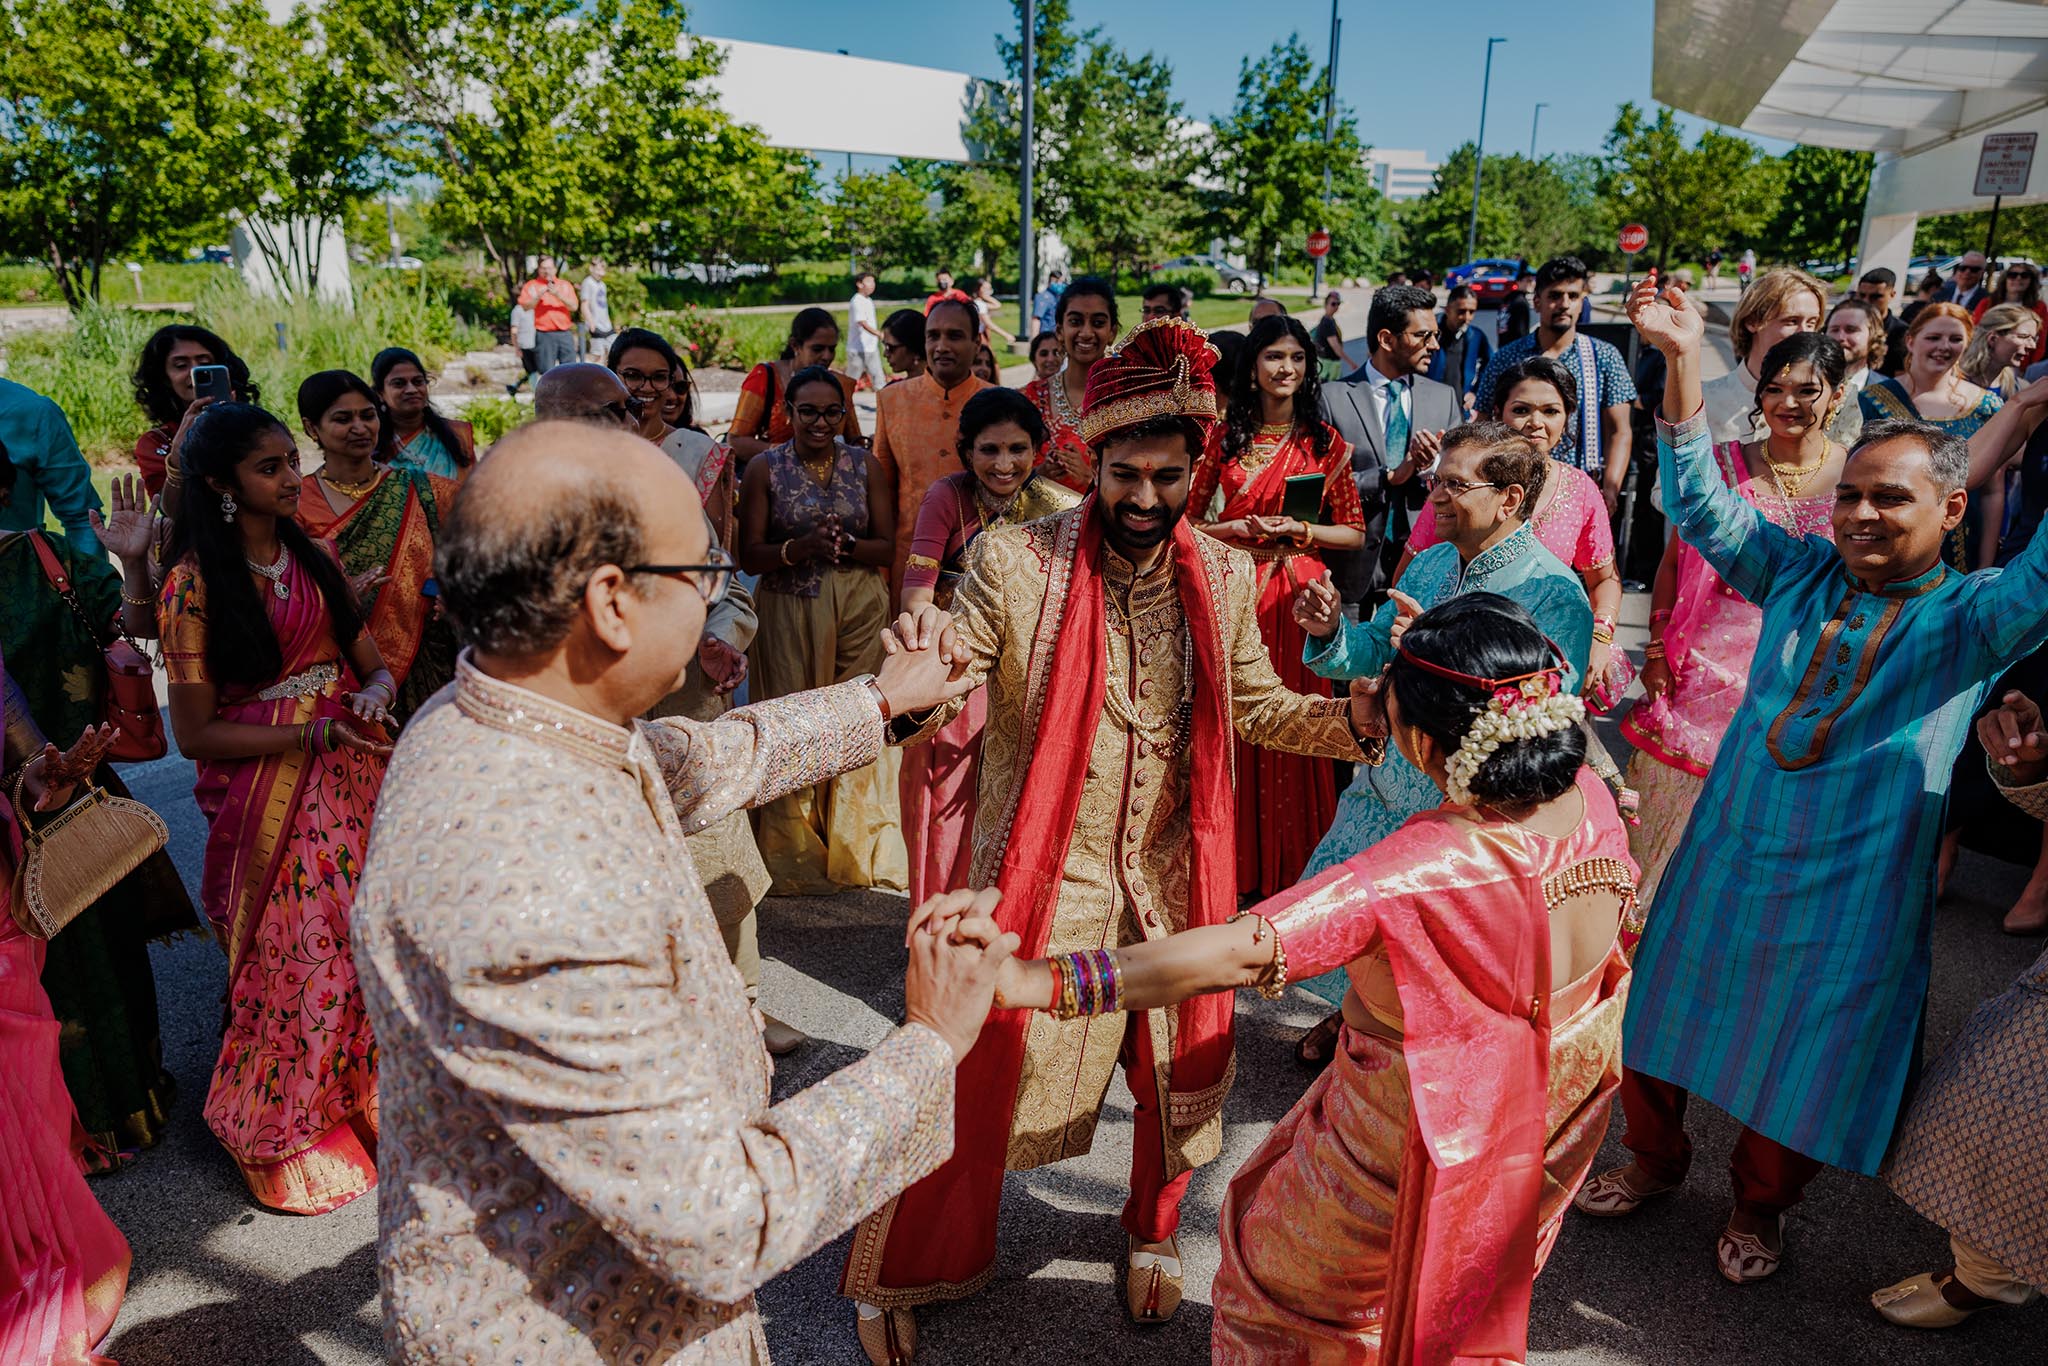 Renaissance Schaumburg Indian Wedding